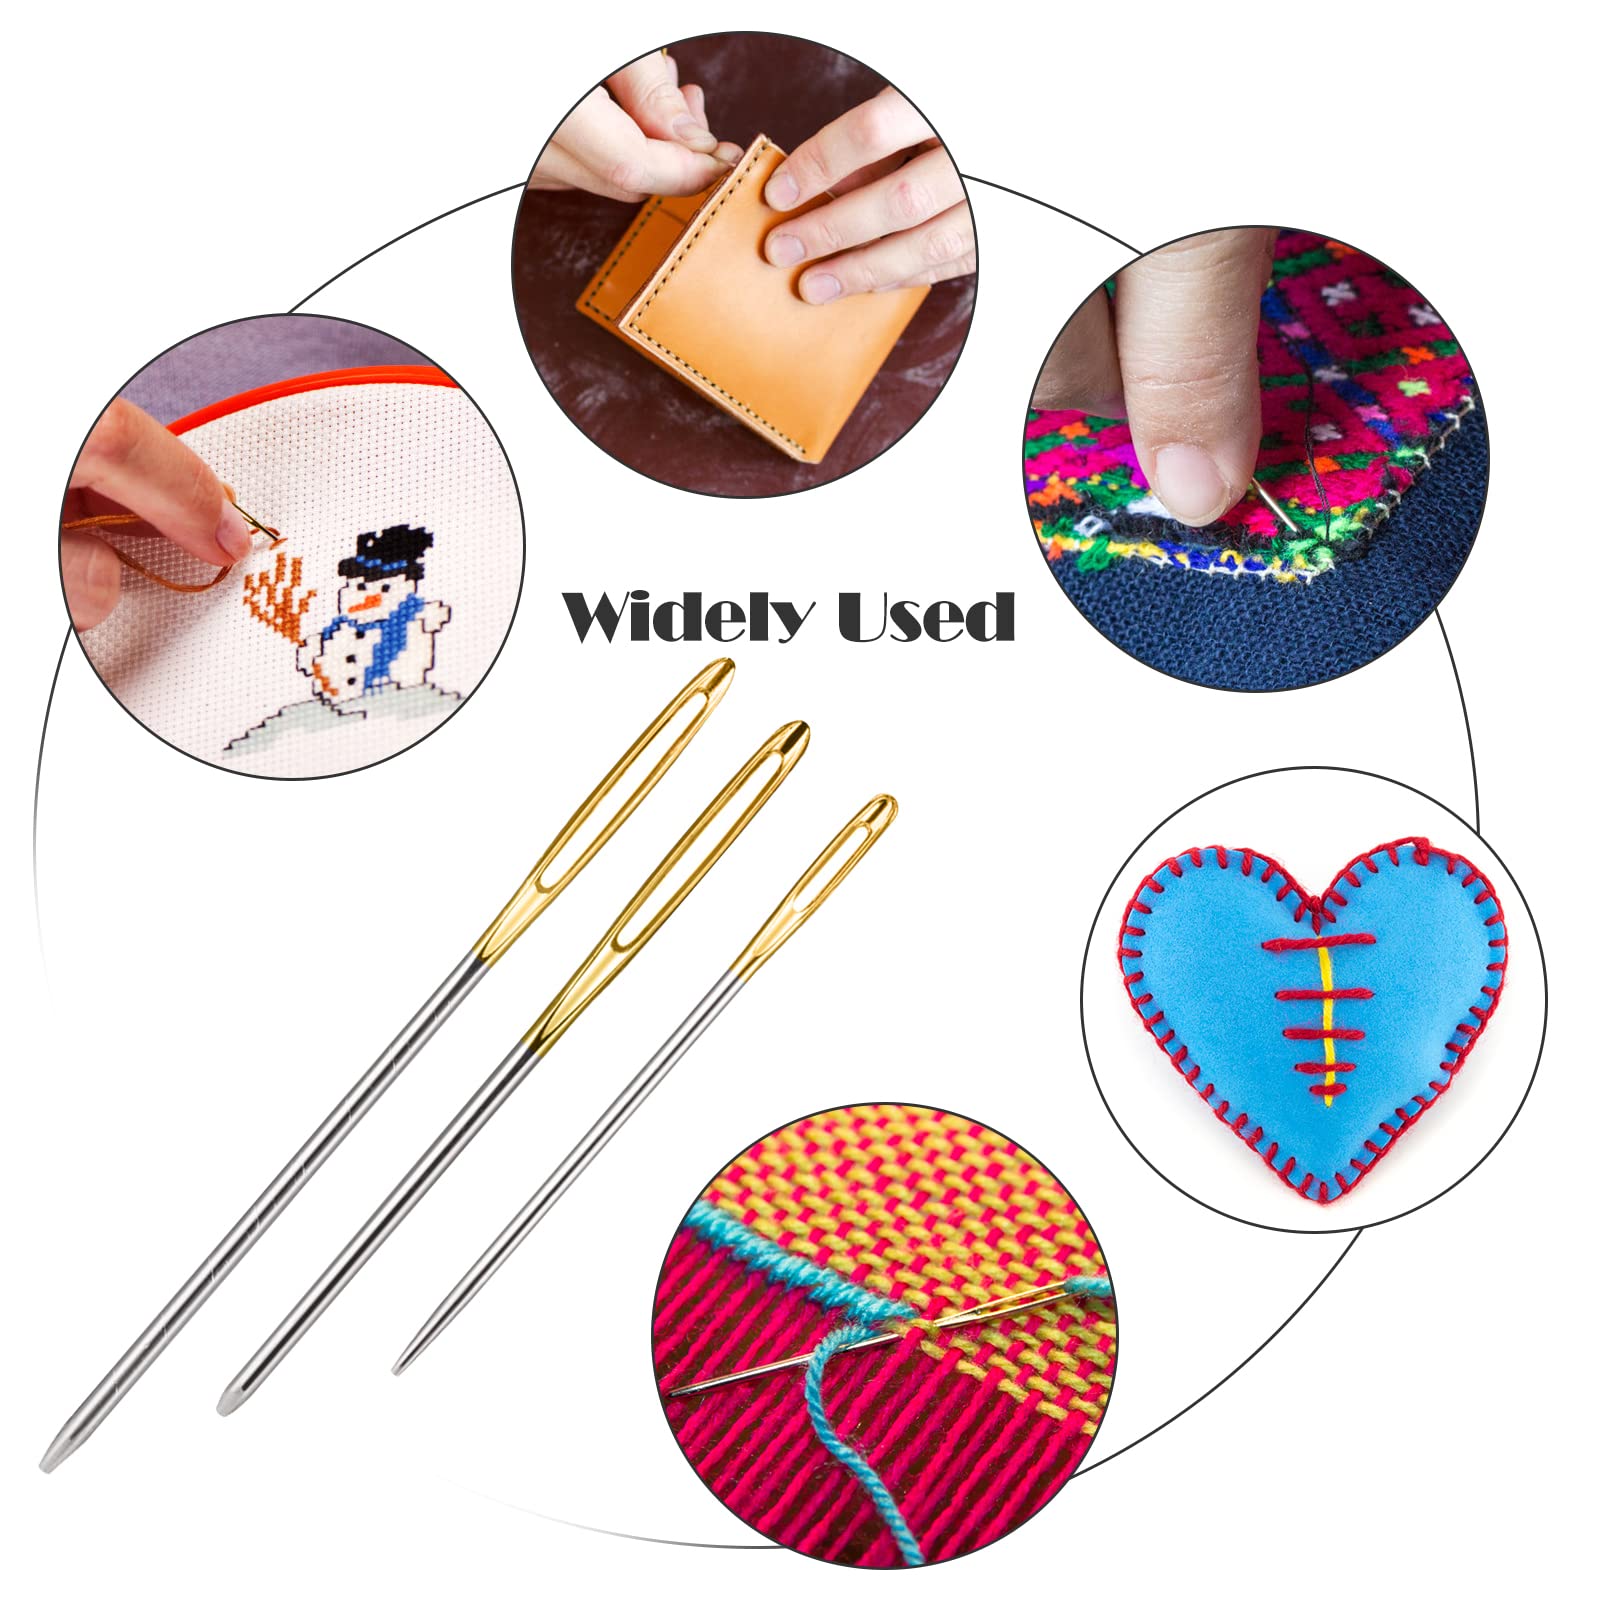 Redamancy Large Eye Blunt Needles, 15 Pcs 3 Sizes Sewing Needles, Metal Darning Needles, Clear Tube Sewing Needles Set, for Yarn Knitting Sewing or DIY Crafting, 5.1 cm, 6.1 cm, 6.9 cm